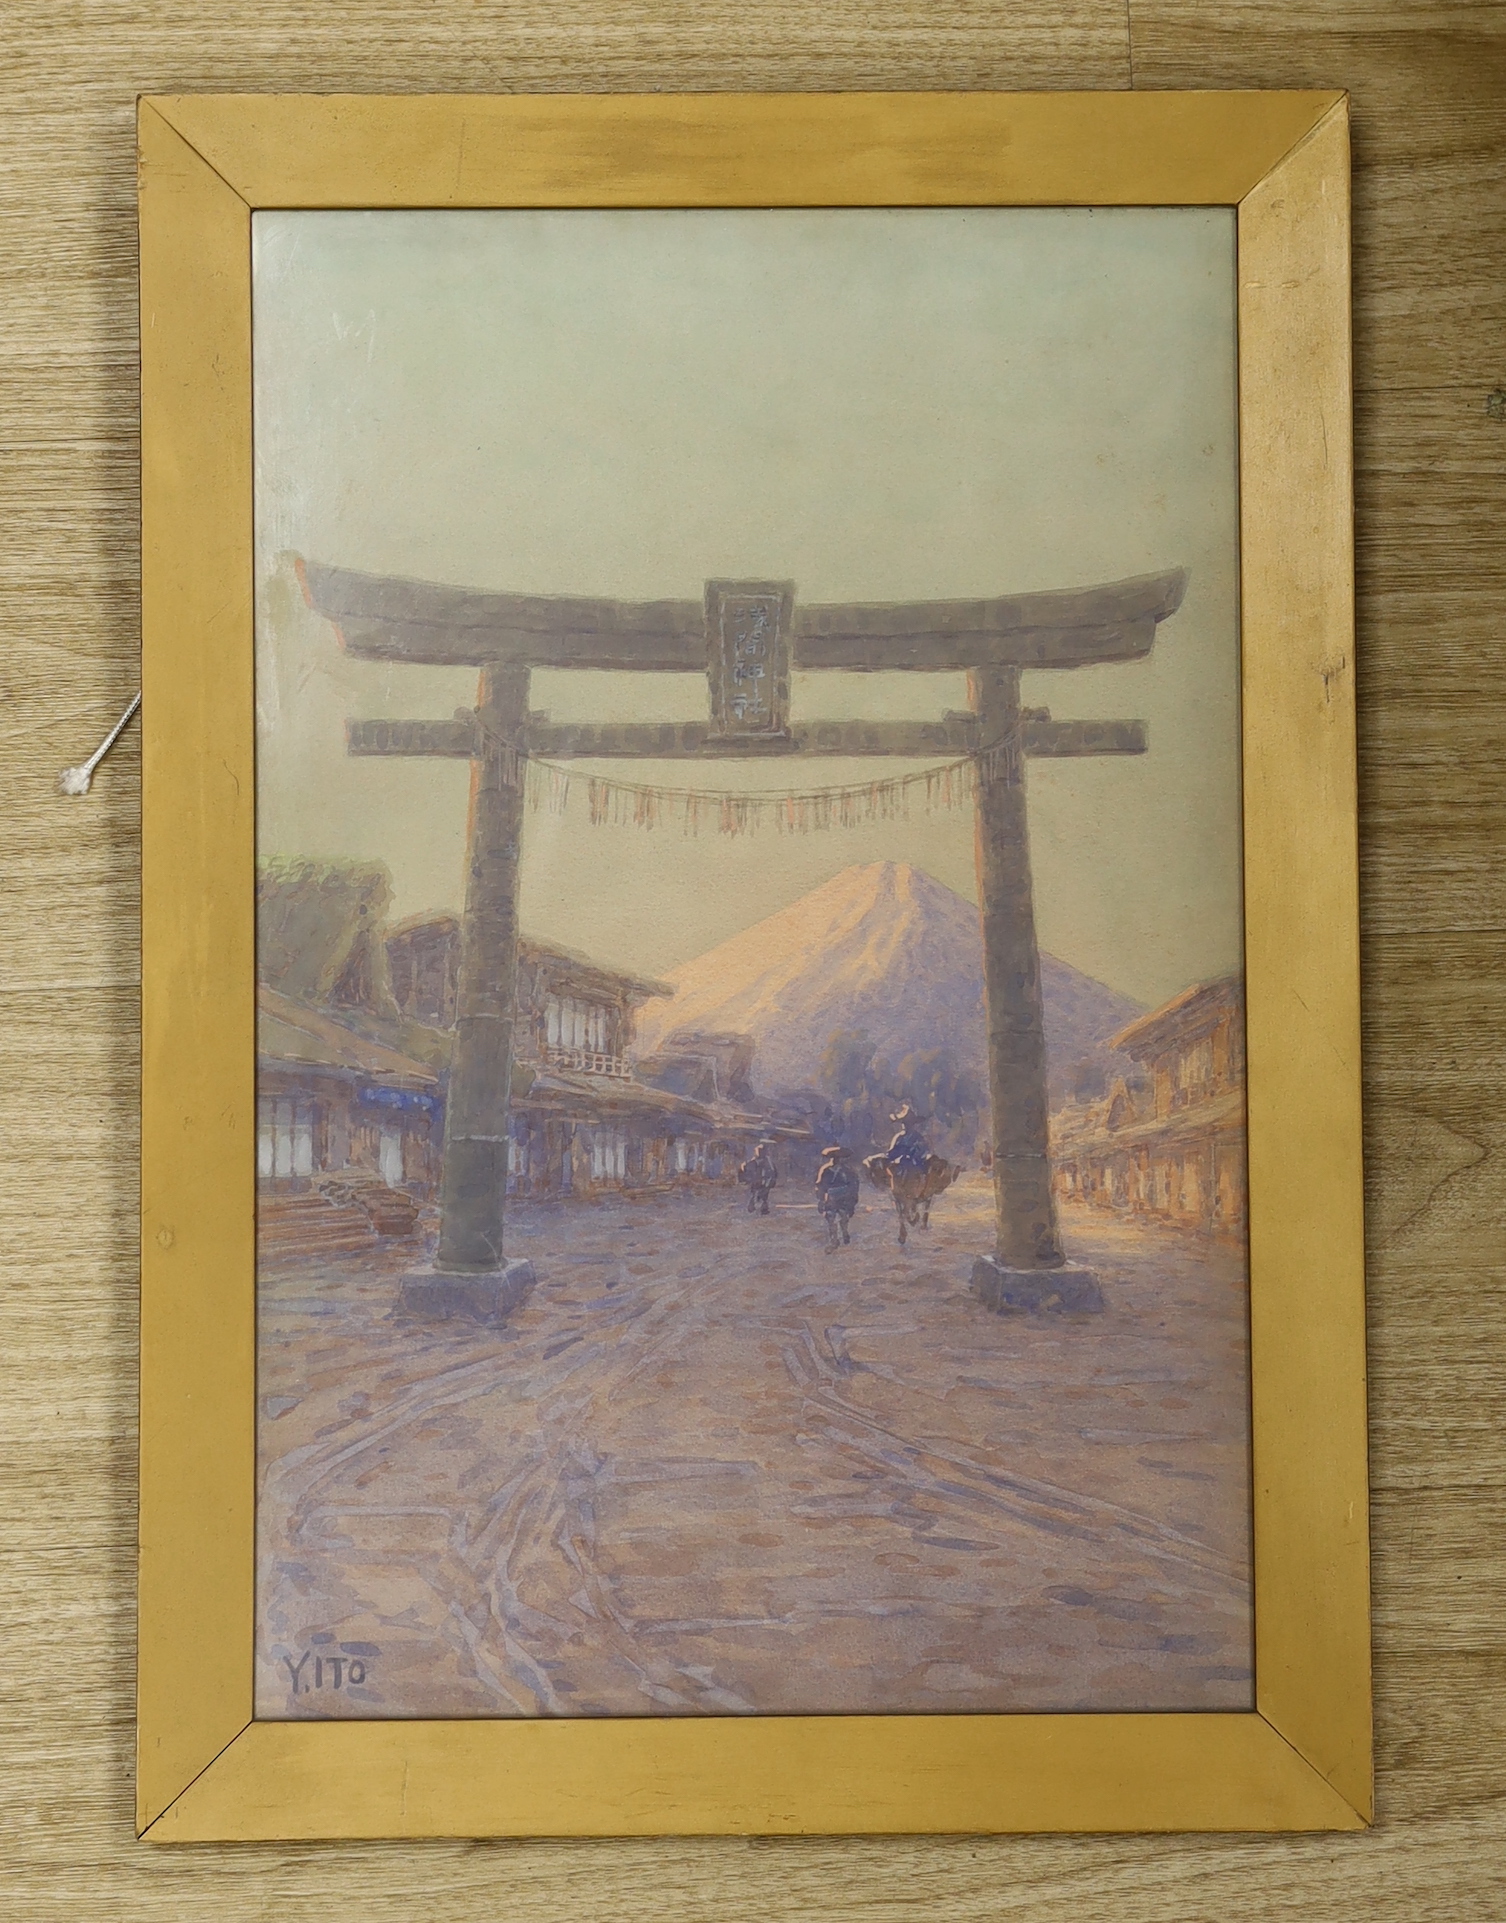 Yoshihiko lto (Japanese, 1867-1942), watercolour, Mount Fuji, signed, 48 x 32cm - Image 2 of 3